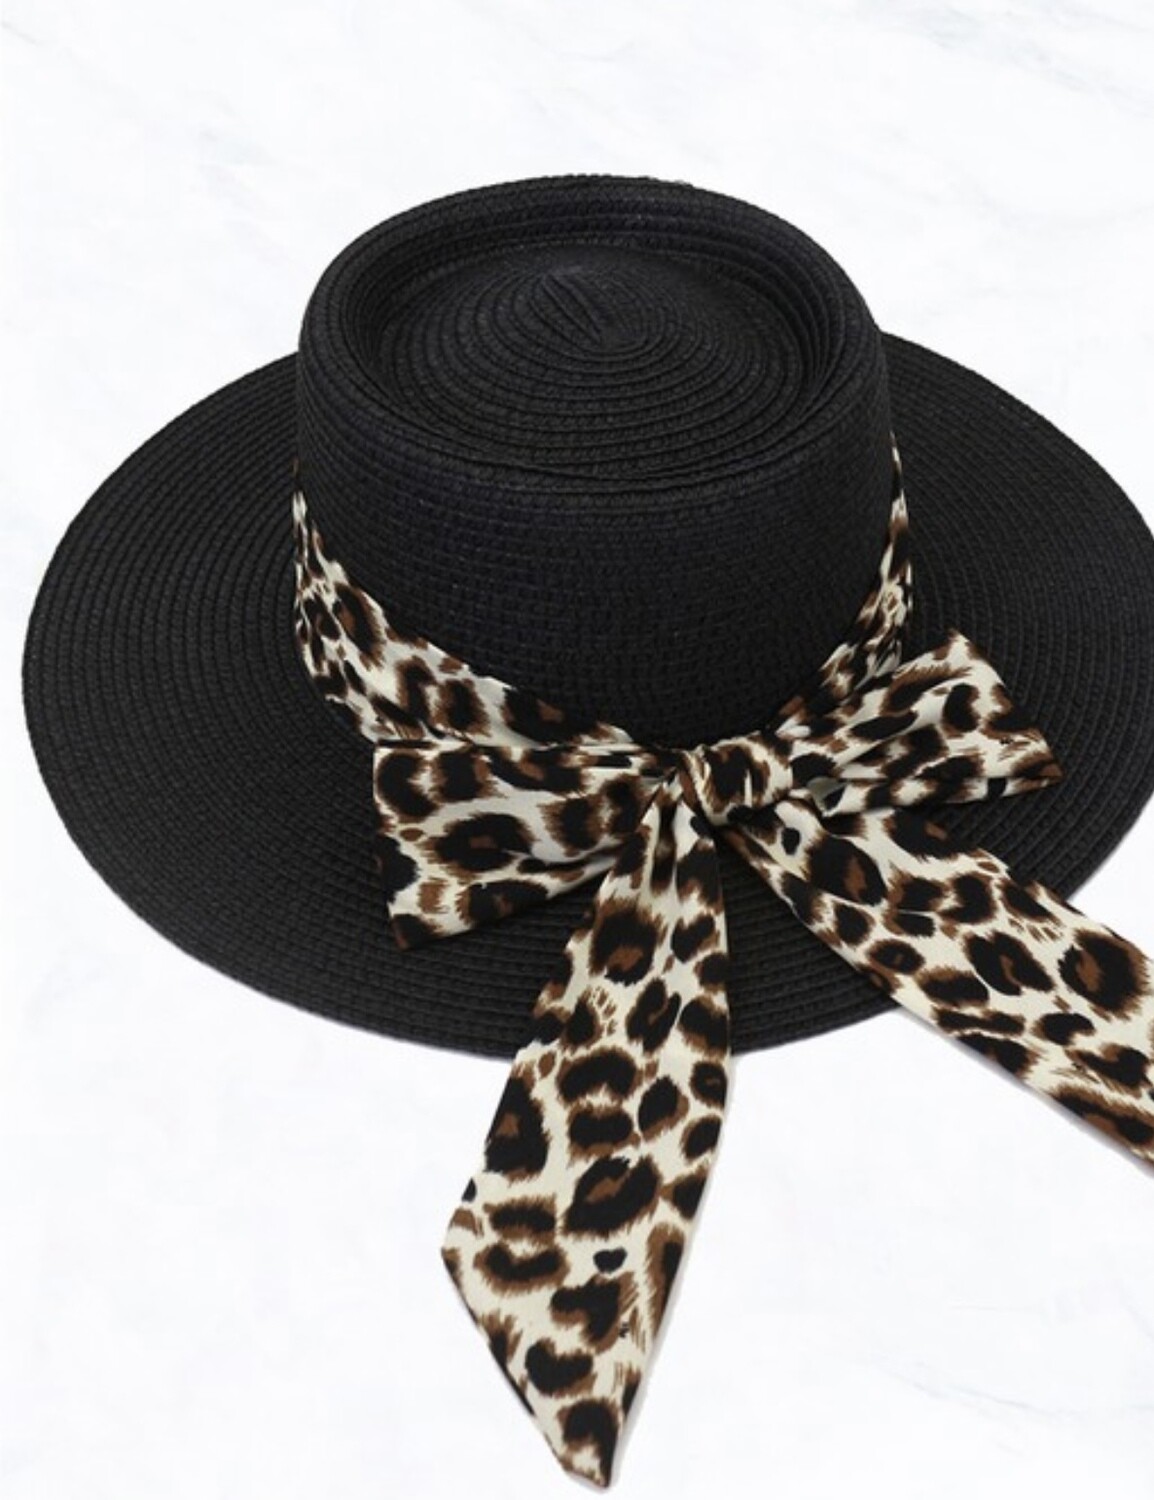 Unisex Straw Sun Hat with Leopard Scarf, Black